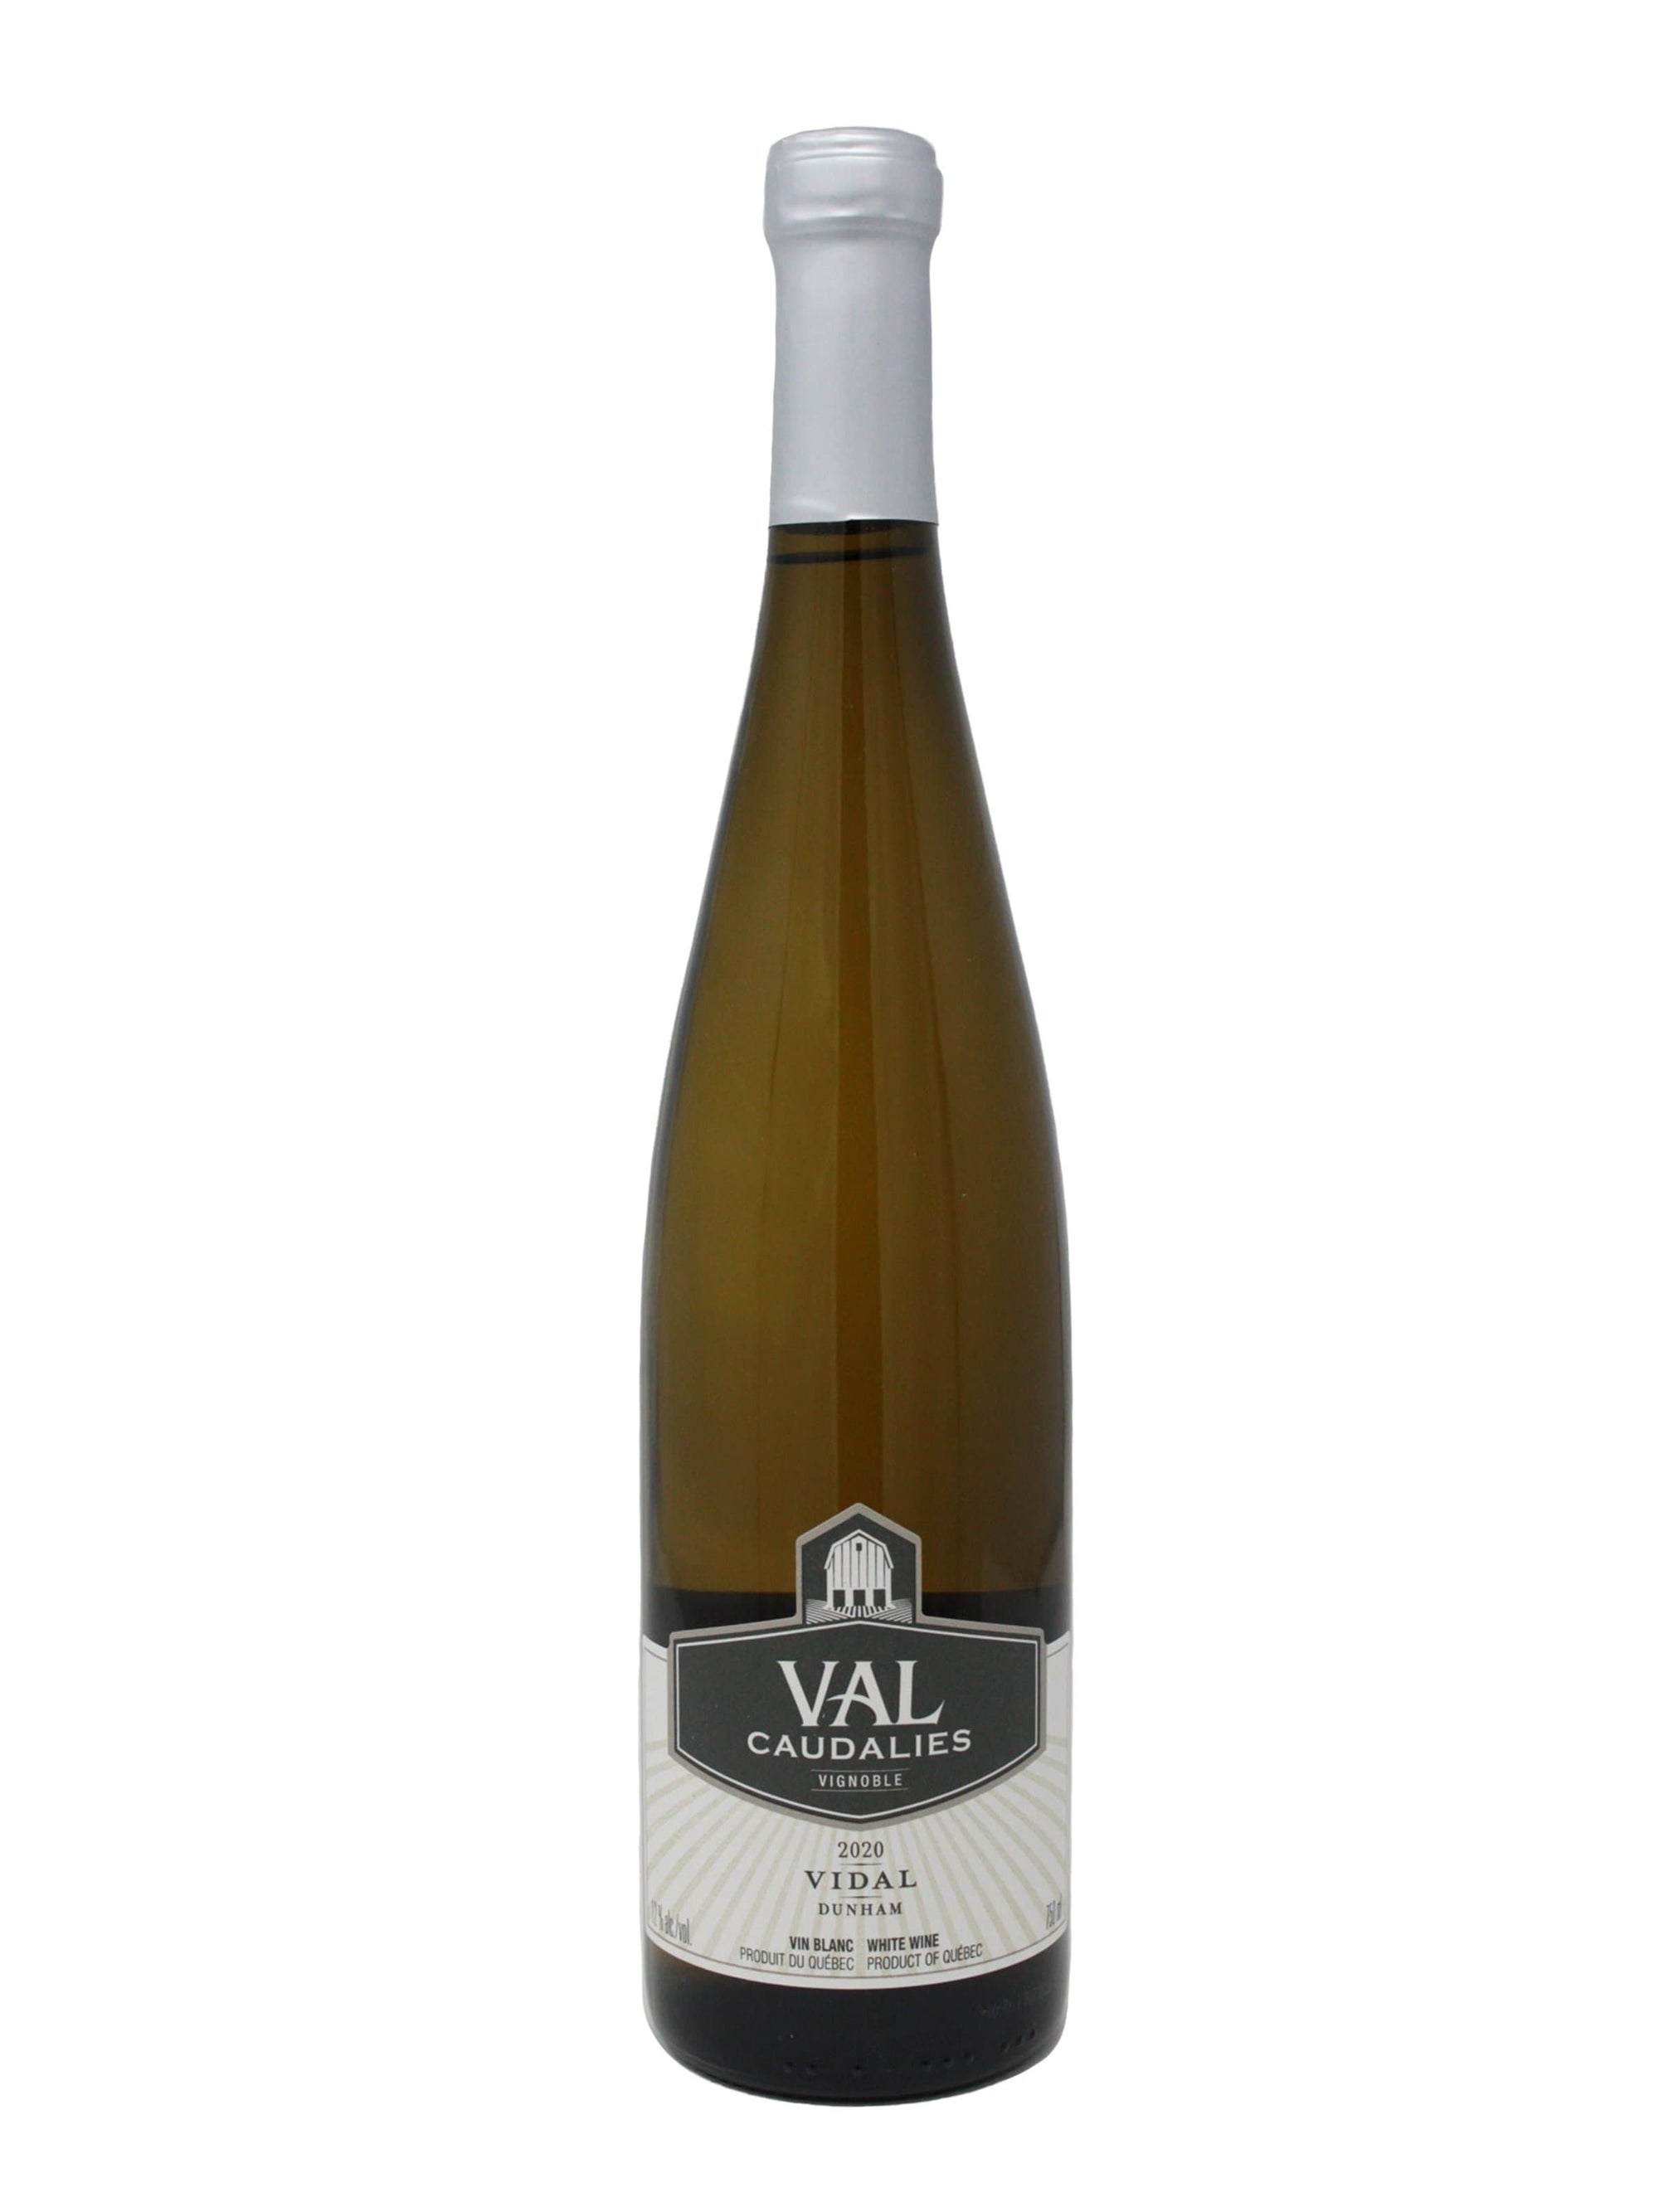 Val Caudalies vin Vidal - Vin blanc de Val Caudalies